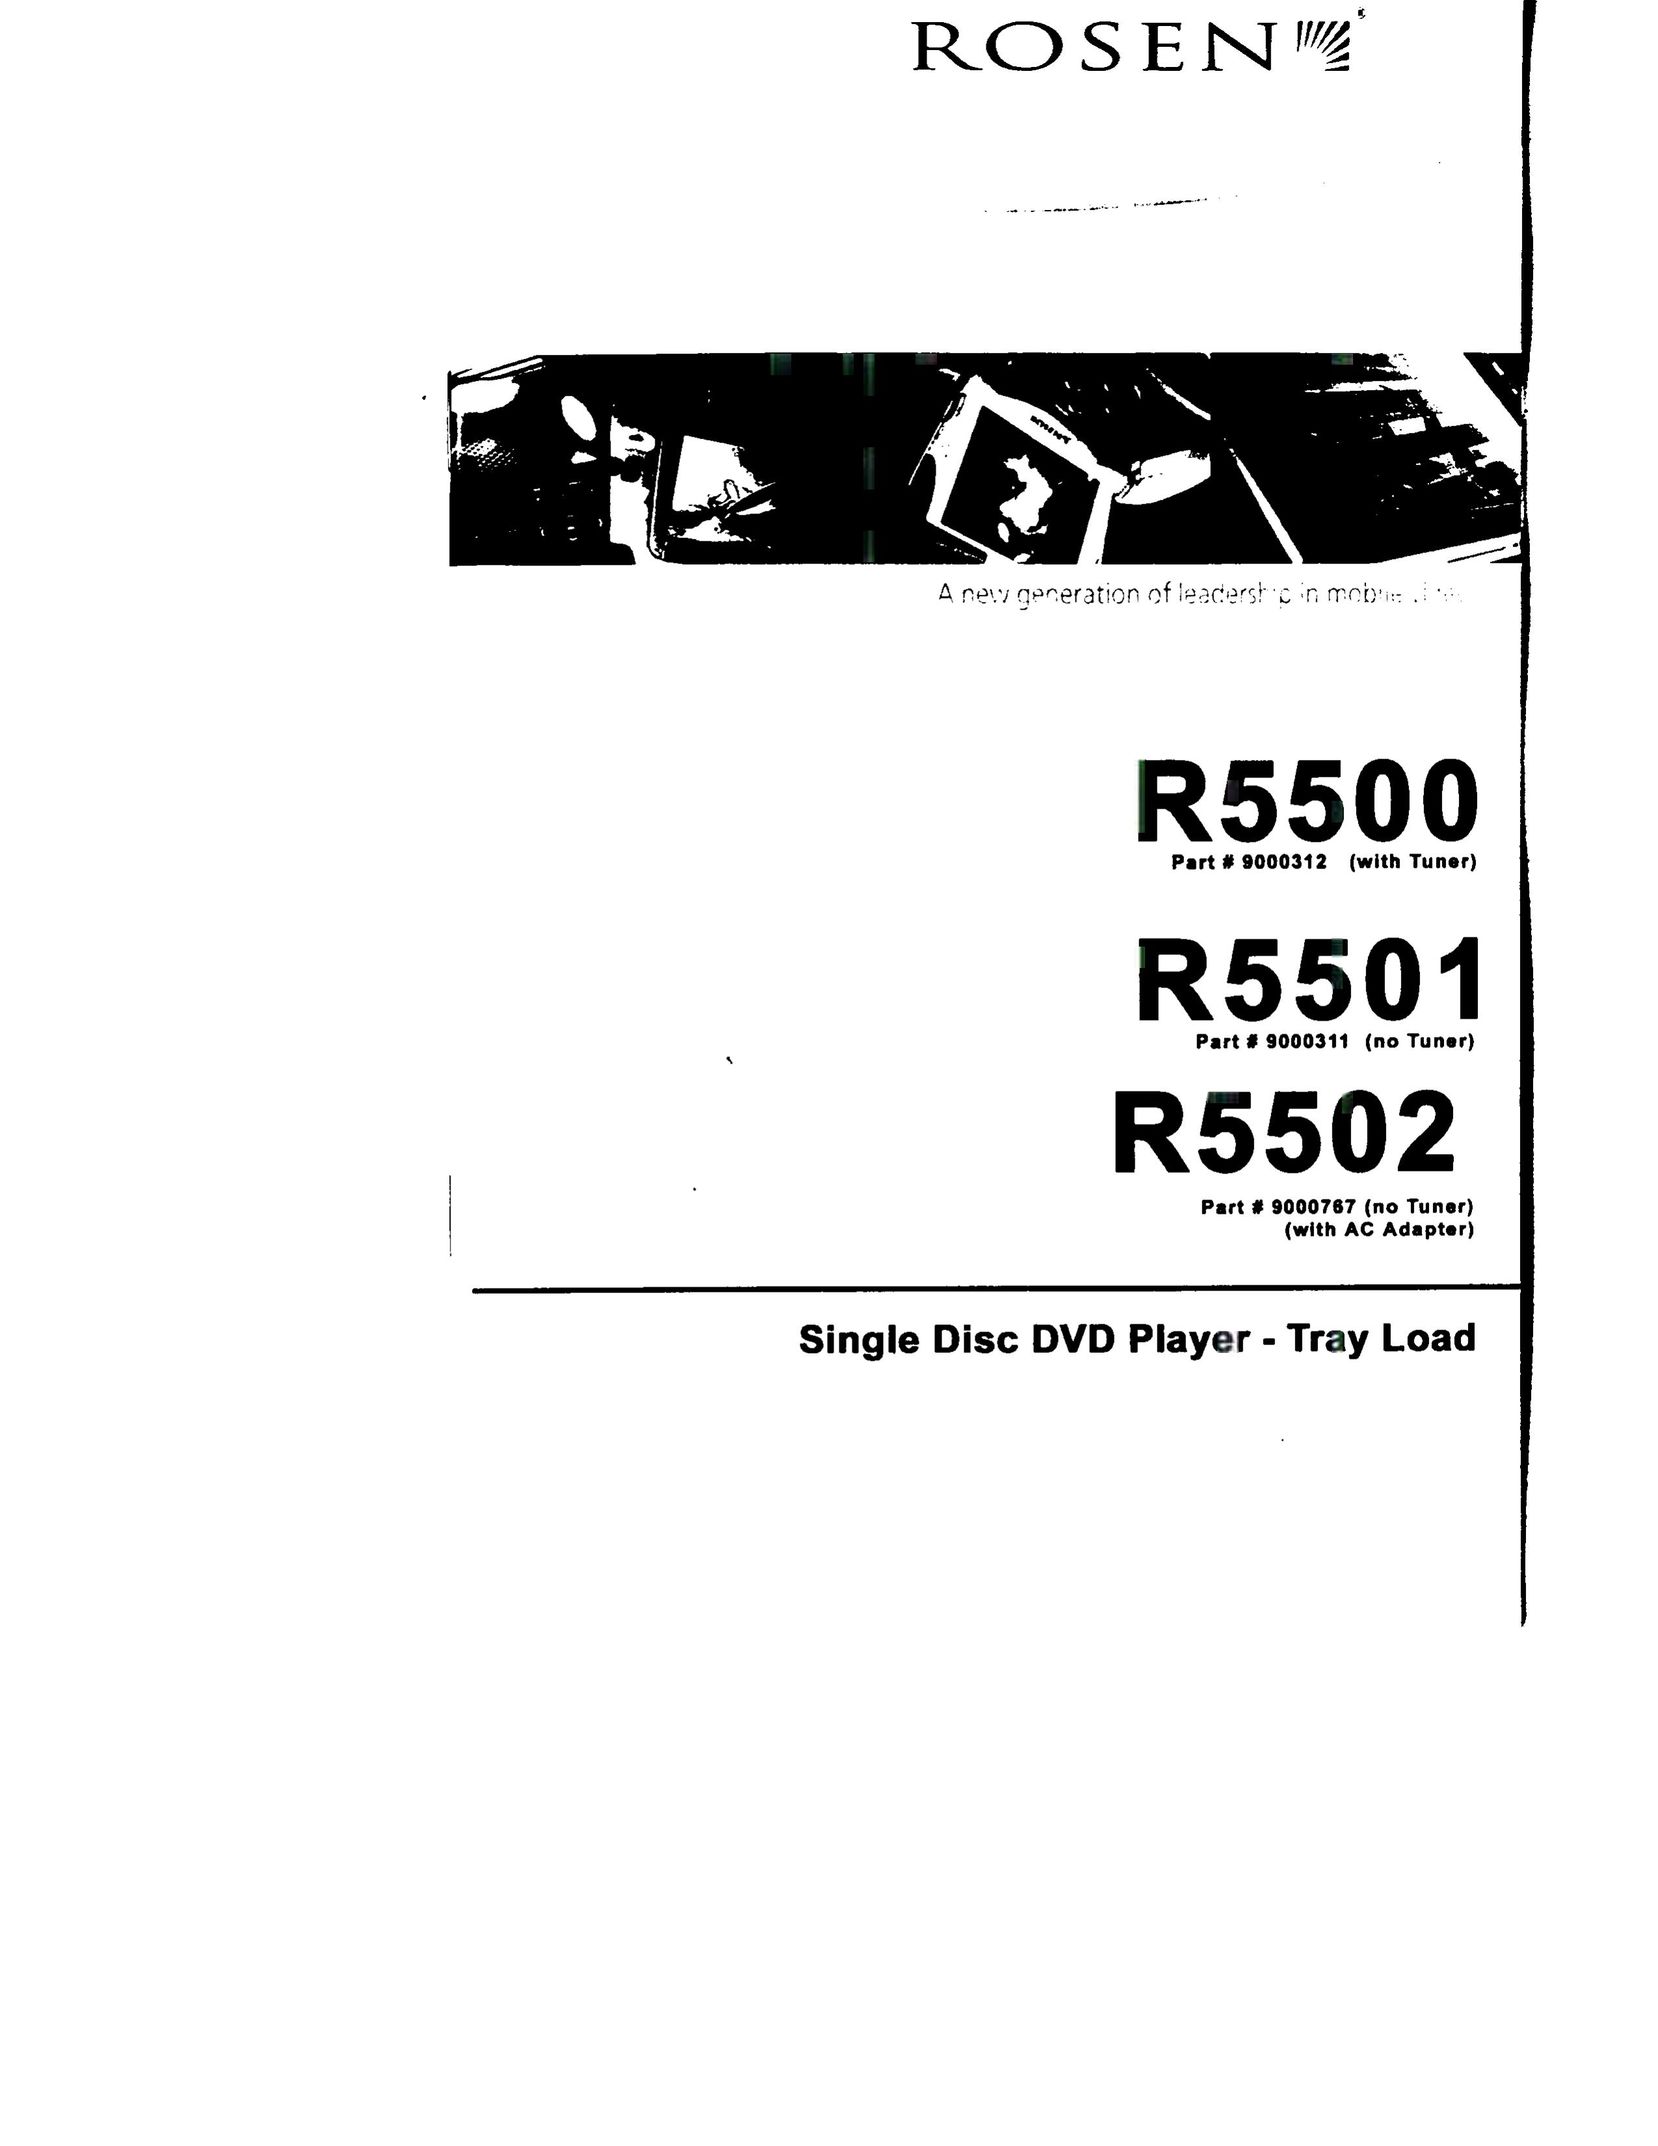 Rosen Entertainment Systems R5500 DVD Player User Manual